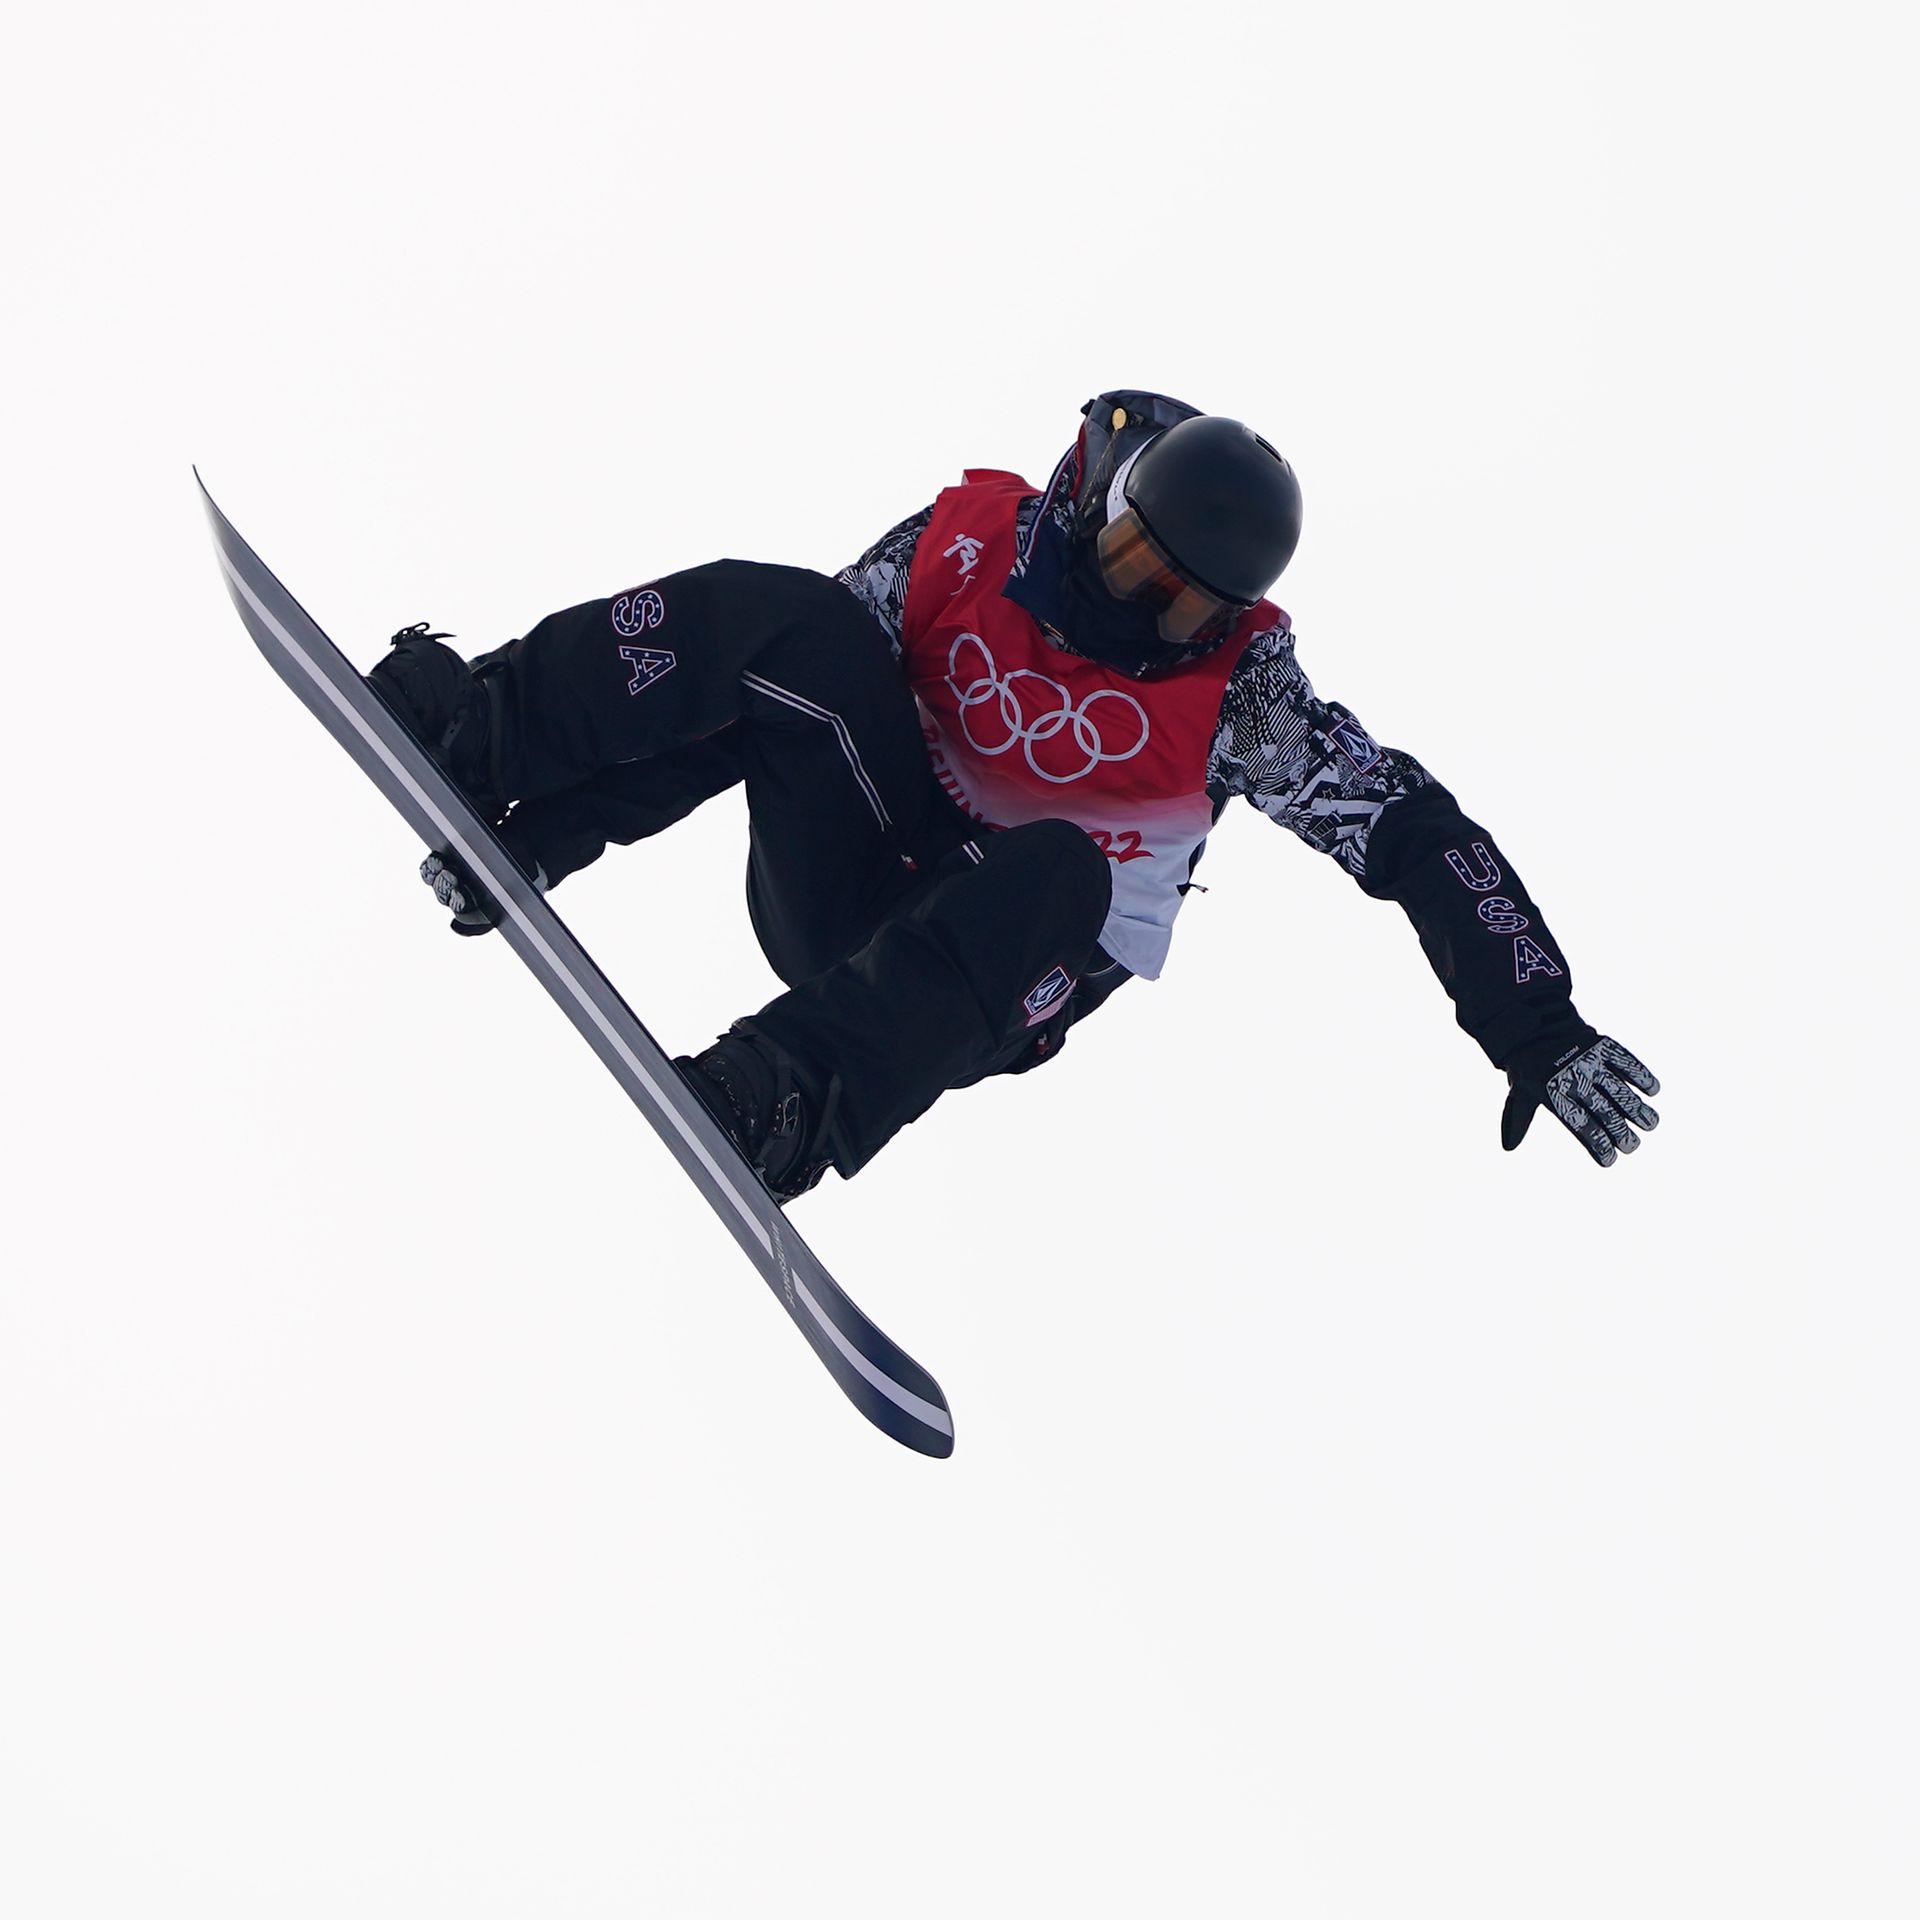 Shaun White grabs Snowboard Halfpipe Gold on his very last run